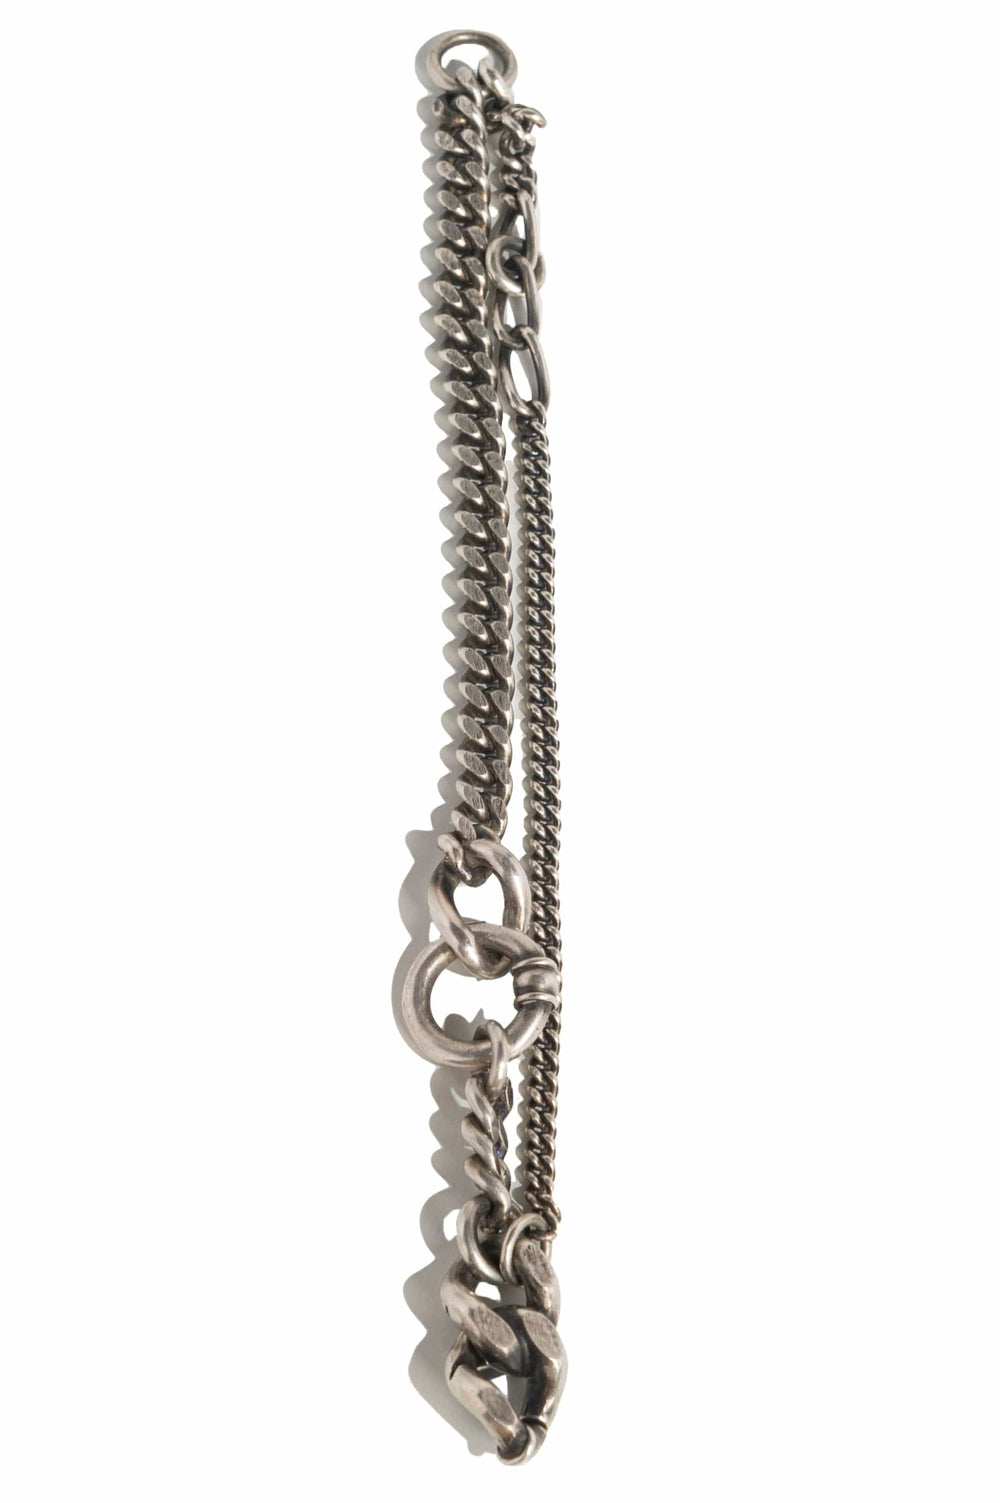 Two Antidote Werkstatt – Bracelet Ring Chains München Lifestyle Silver Fashion and